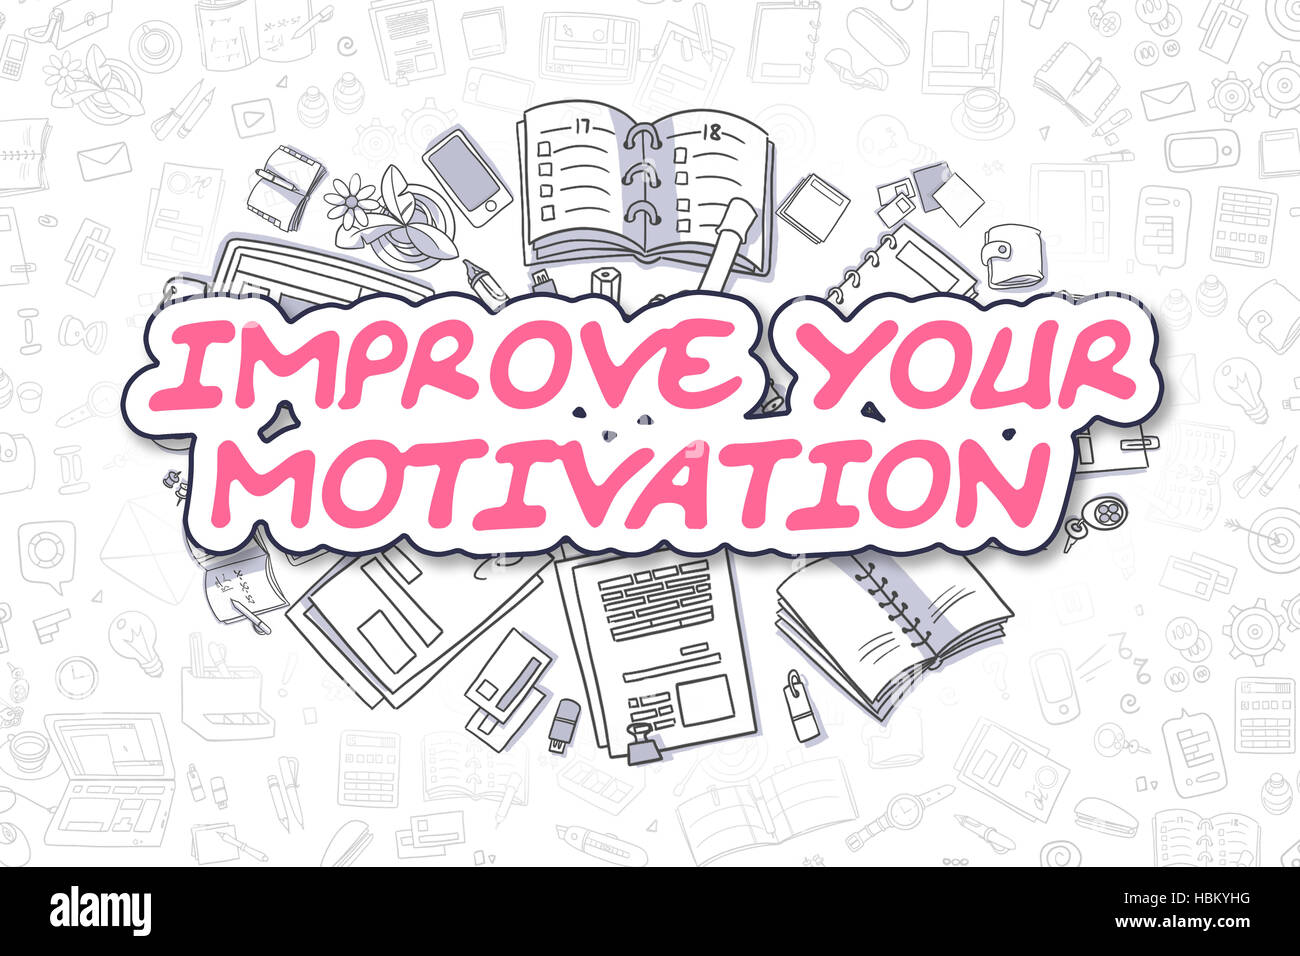 Improve Your Motivation - Business Concept. Stock Photo